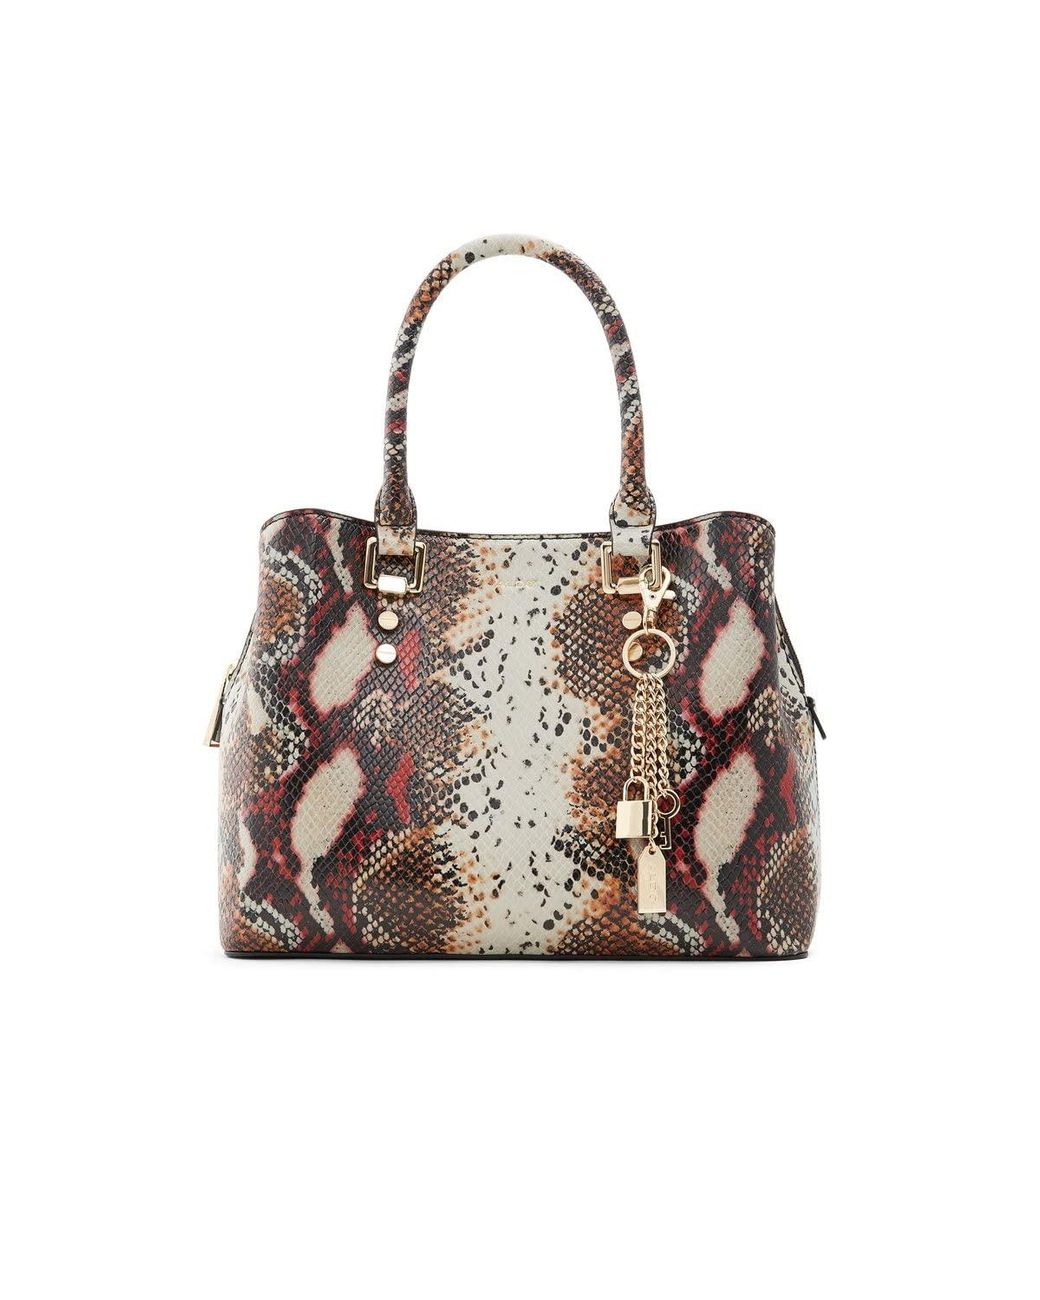 ALDO handbag  Aldo handbags, Bags, Fancy bags